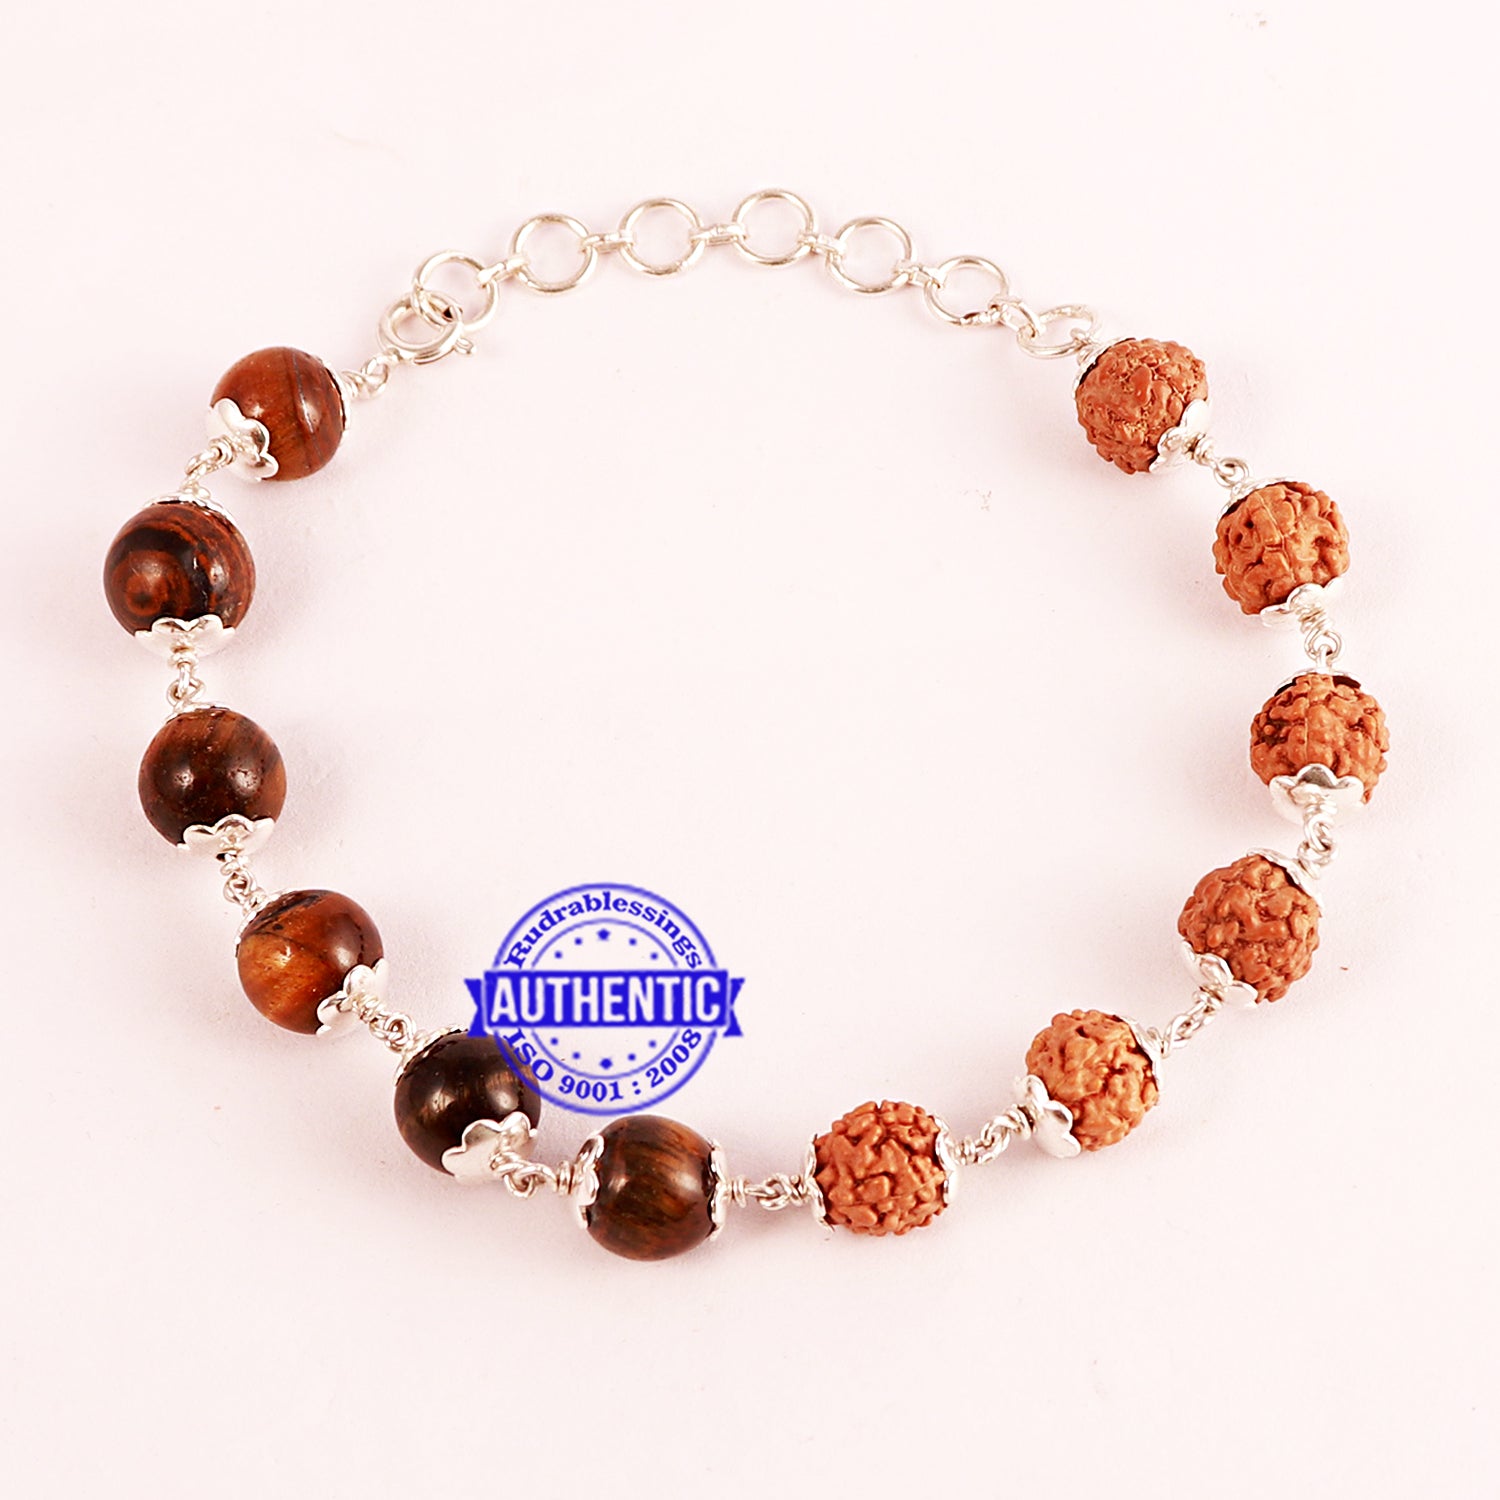 7 chakra semi precious gemstone lava beads bracelet at Rs 299 / pc in delhi